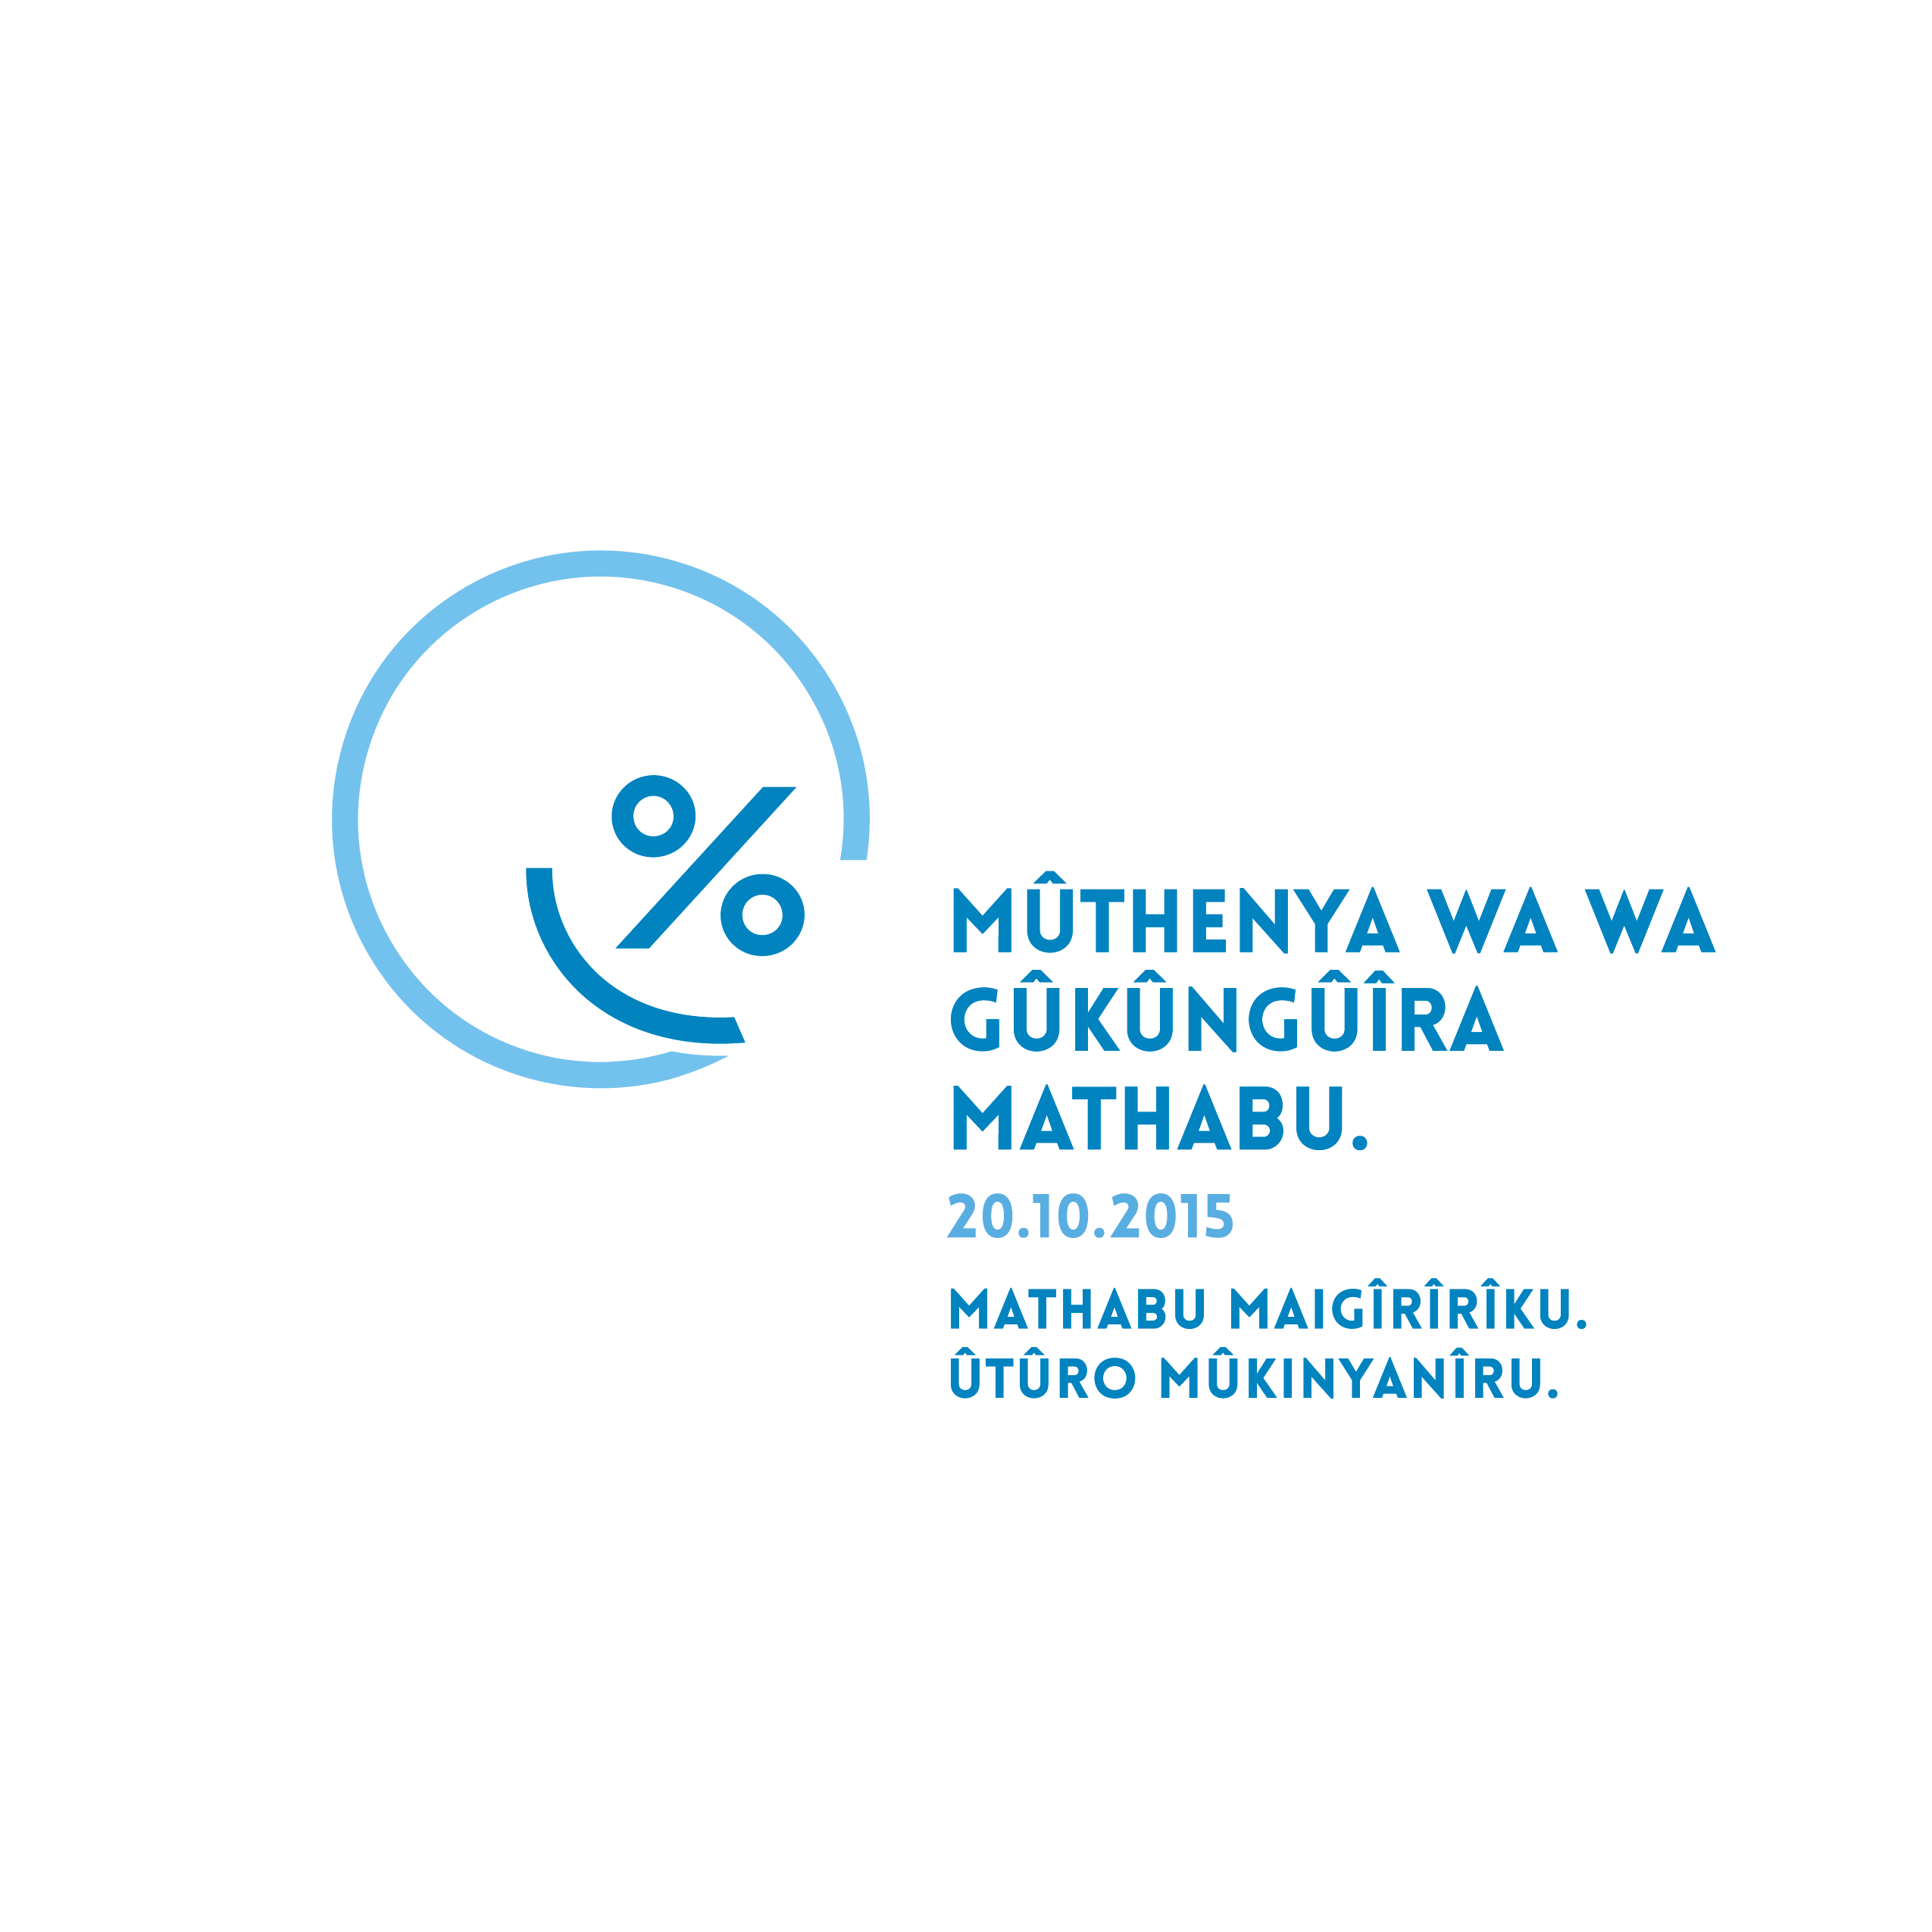 World Statistics Day Logo in Swahili